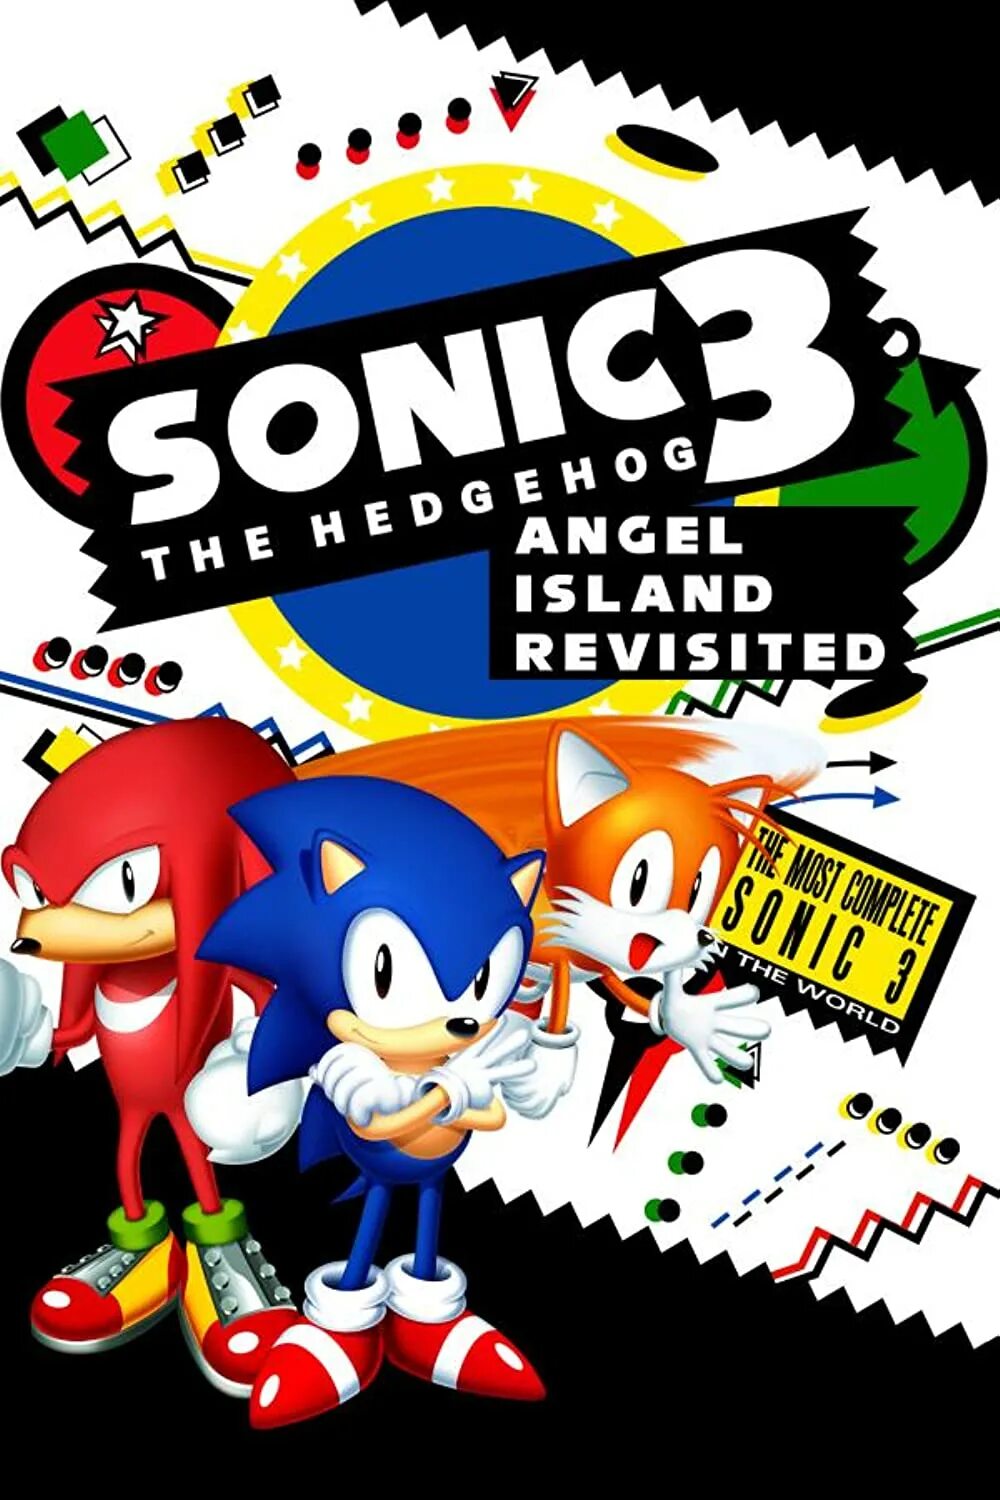 Игра Sonic the Hedgehog 3. Sonic 3 Air. Sonic 3 Air logo. Angel Island! (Sonic 3 and Knuckles). Sonic 3 air knuckles